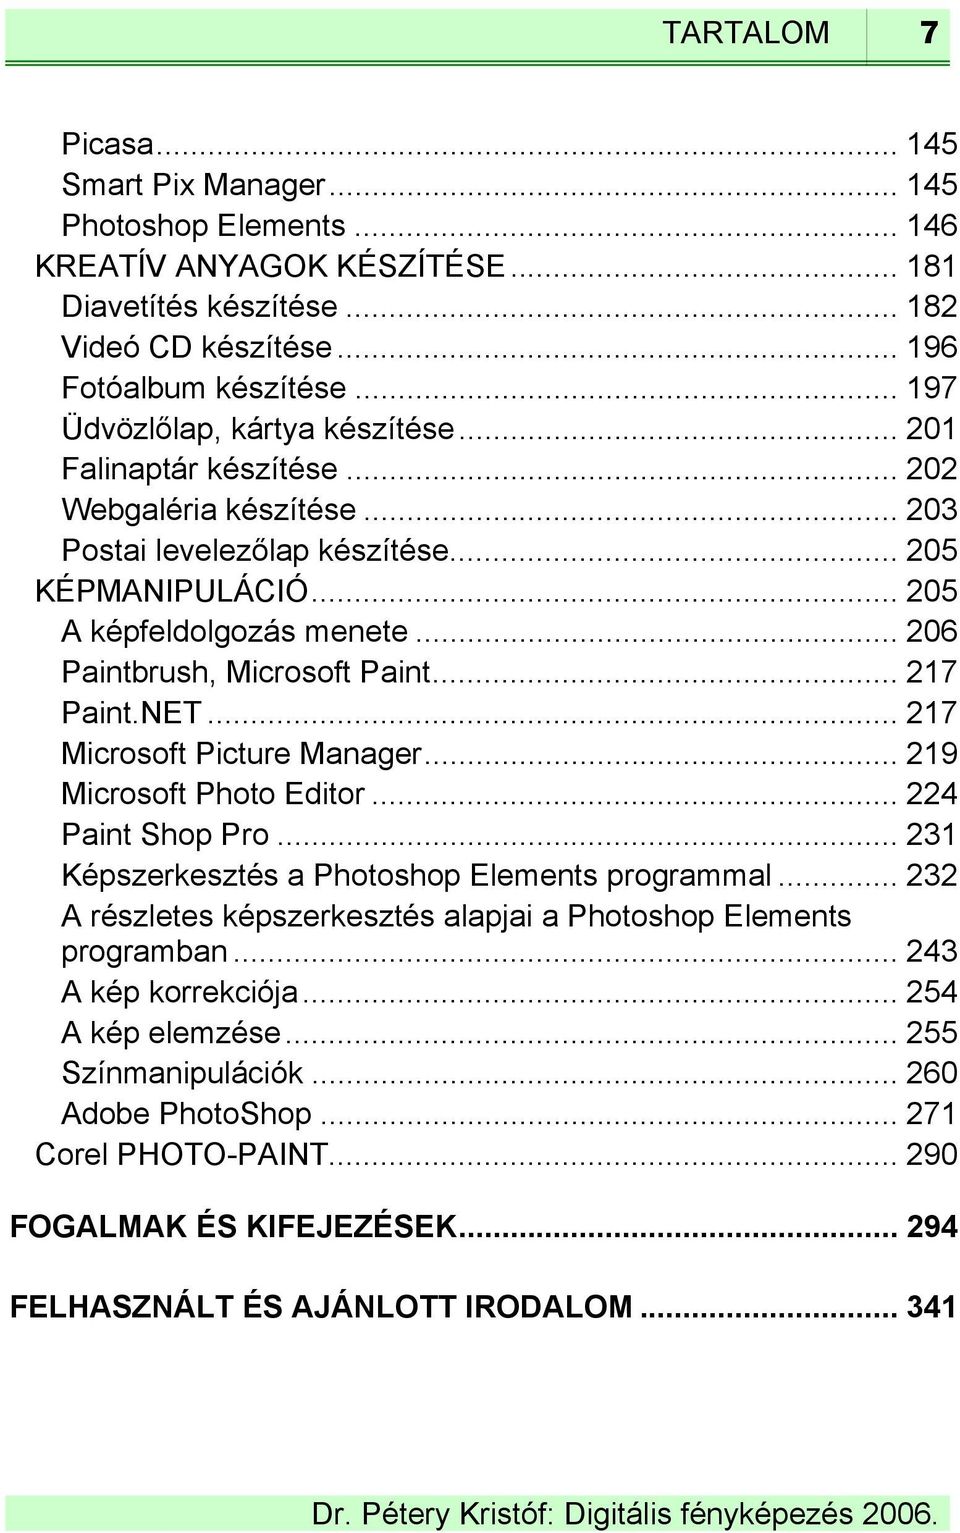 .. 206 Paintbrush, Microsoft Paint... 217 Paint.NET... 217 Microsoft Picture Manager... 219 Microsoft Photo Editor... 224 Paint Shop Pro... 231 Képszerkesztés a Photoshop Elements programmal.